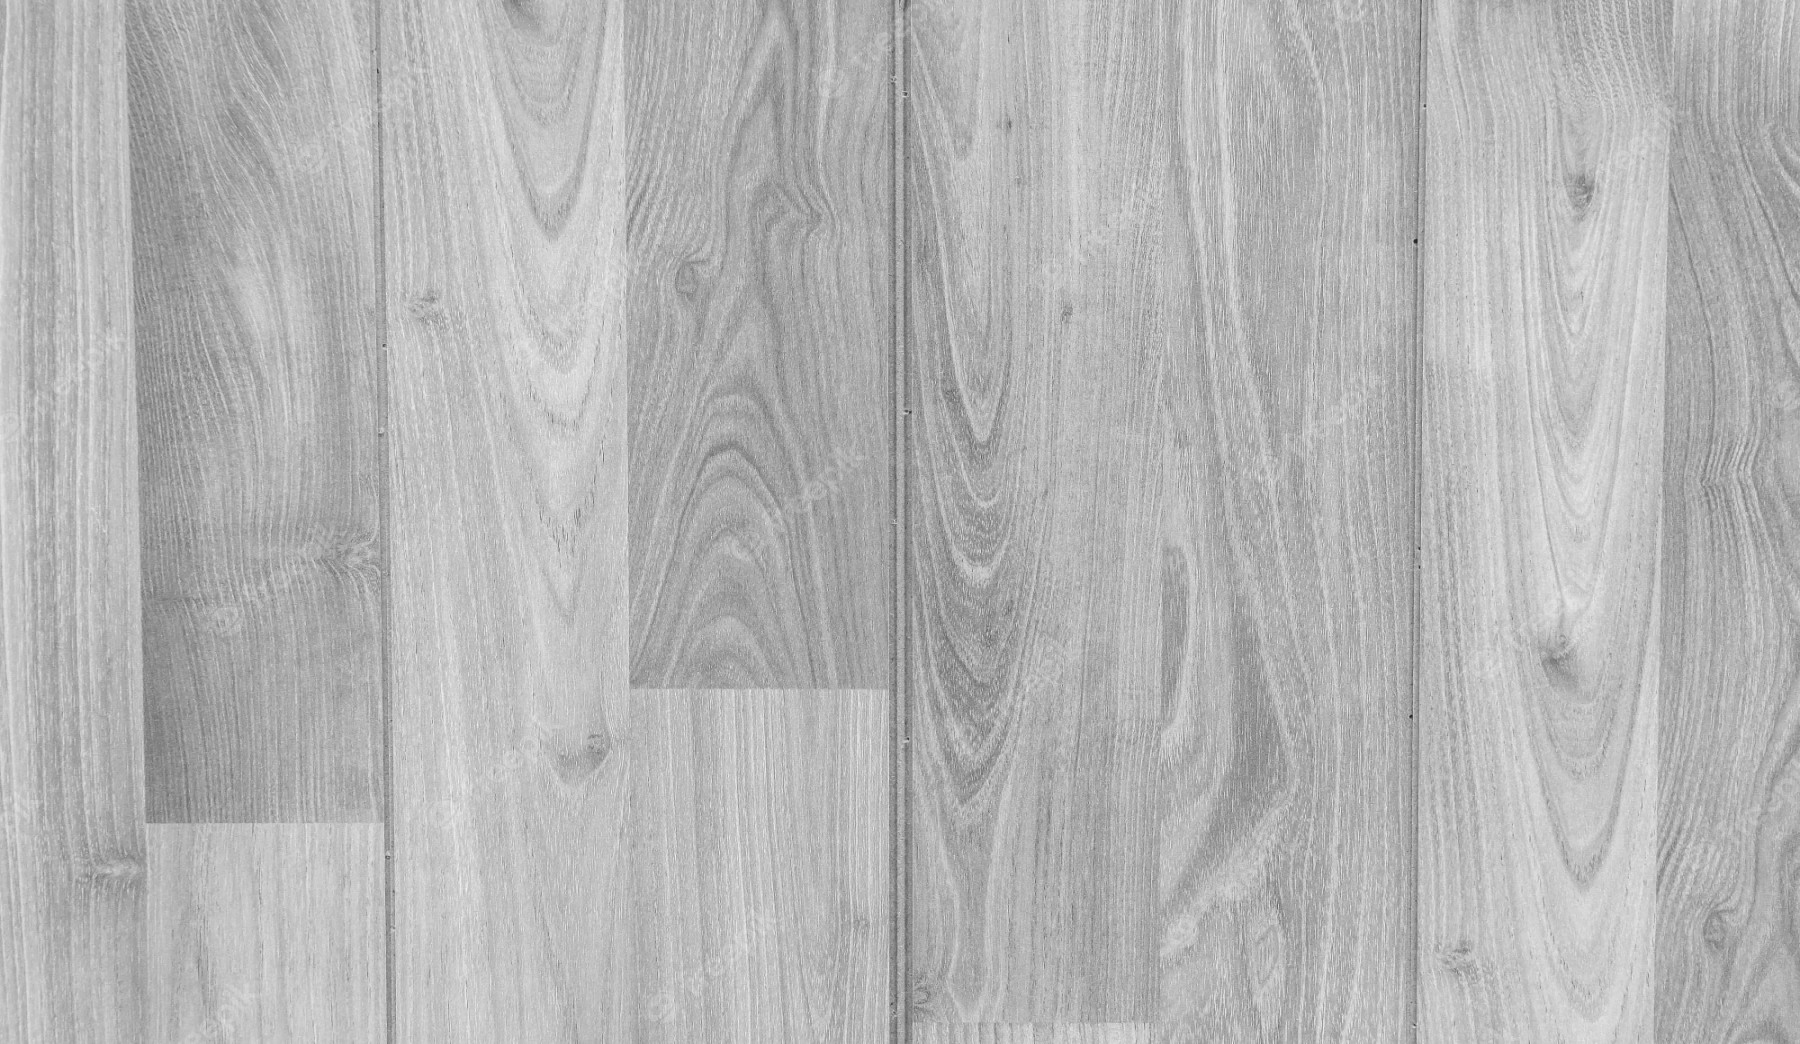 Grey Wood Floor Images - Free Download on Freepik